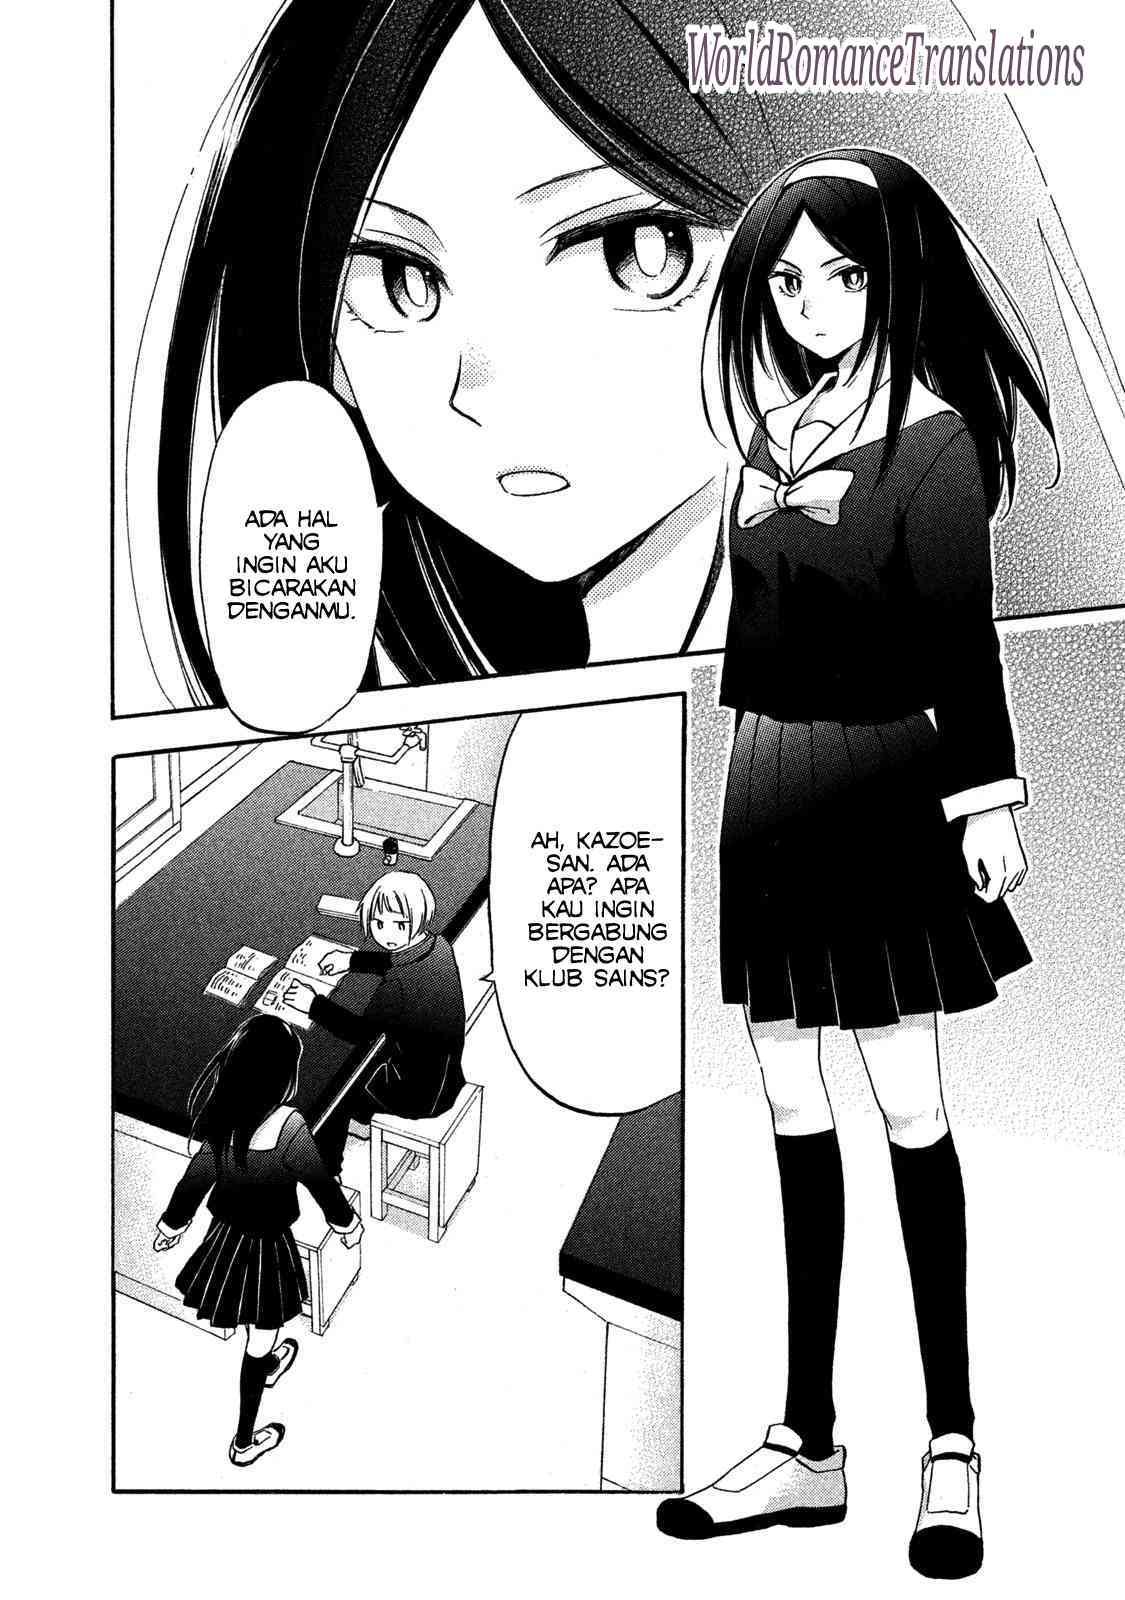 Baca Hanazono and Kazoe’s Bizzare After School Rendezvous Chapter 1  - GudangKomik